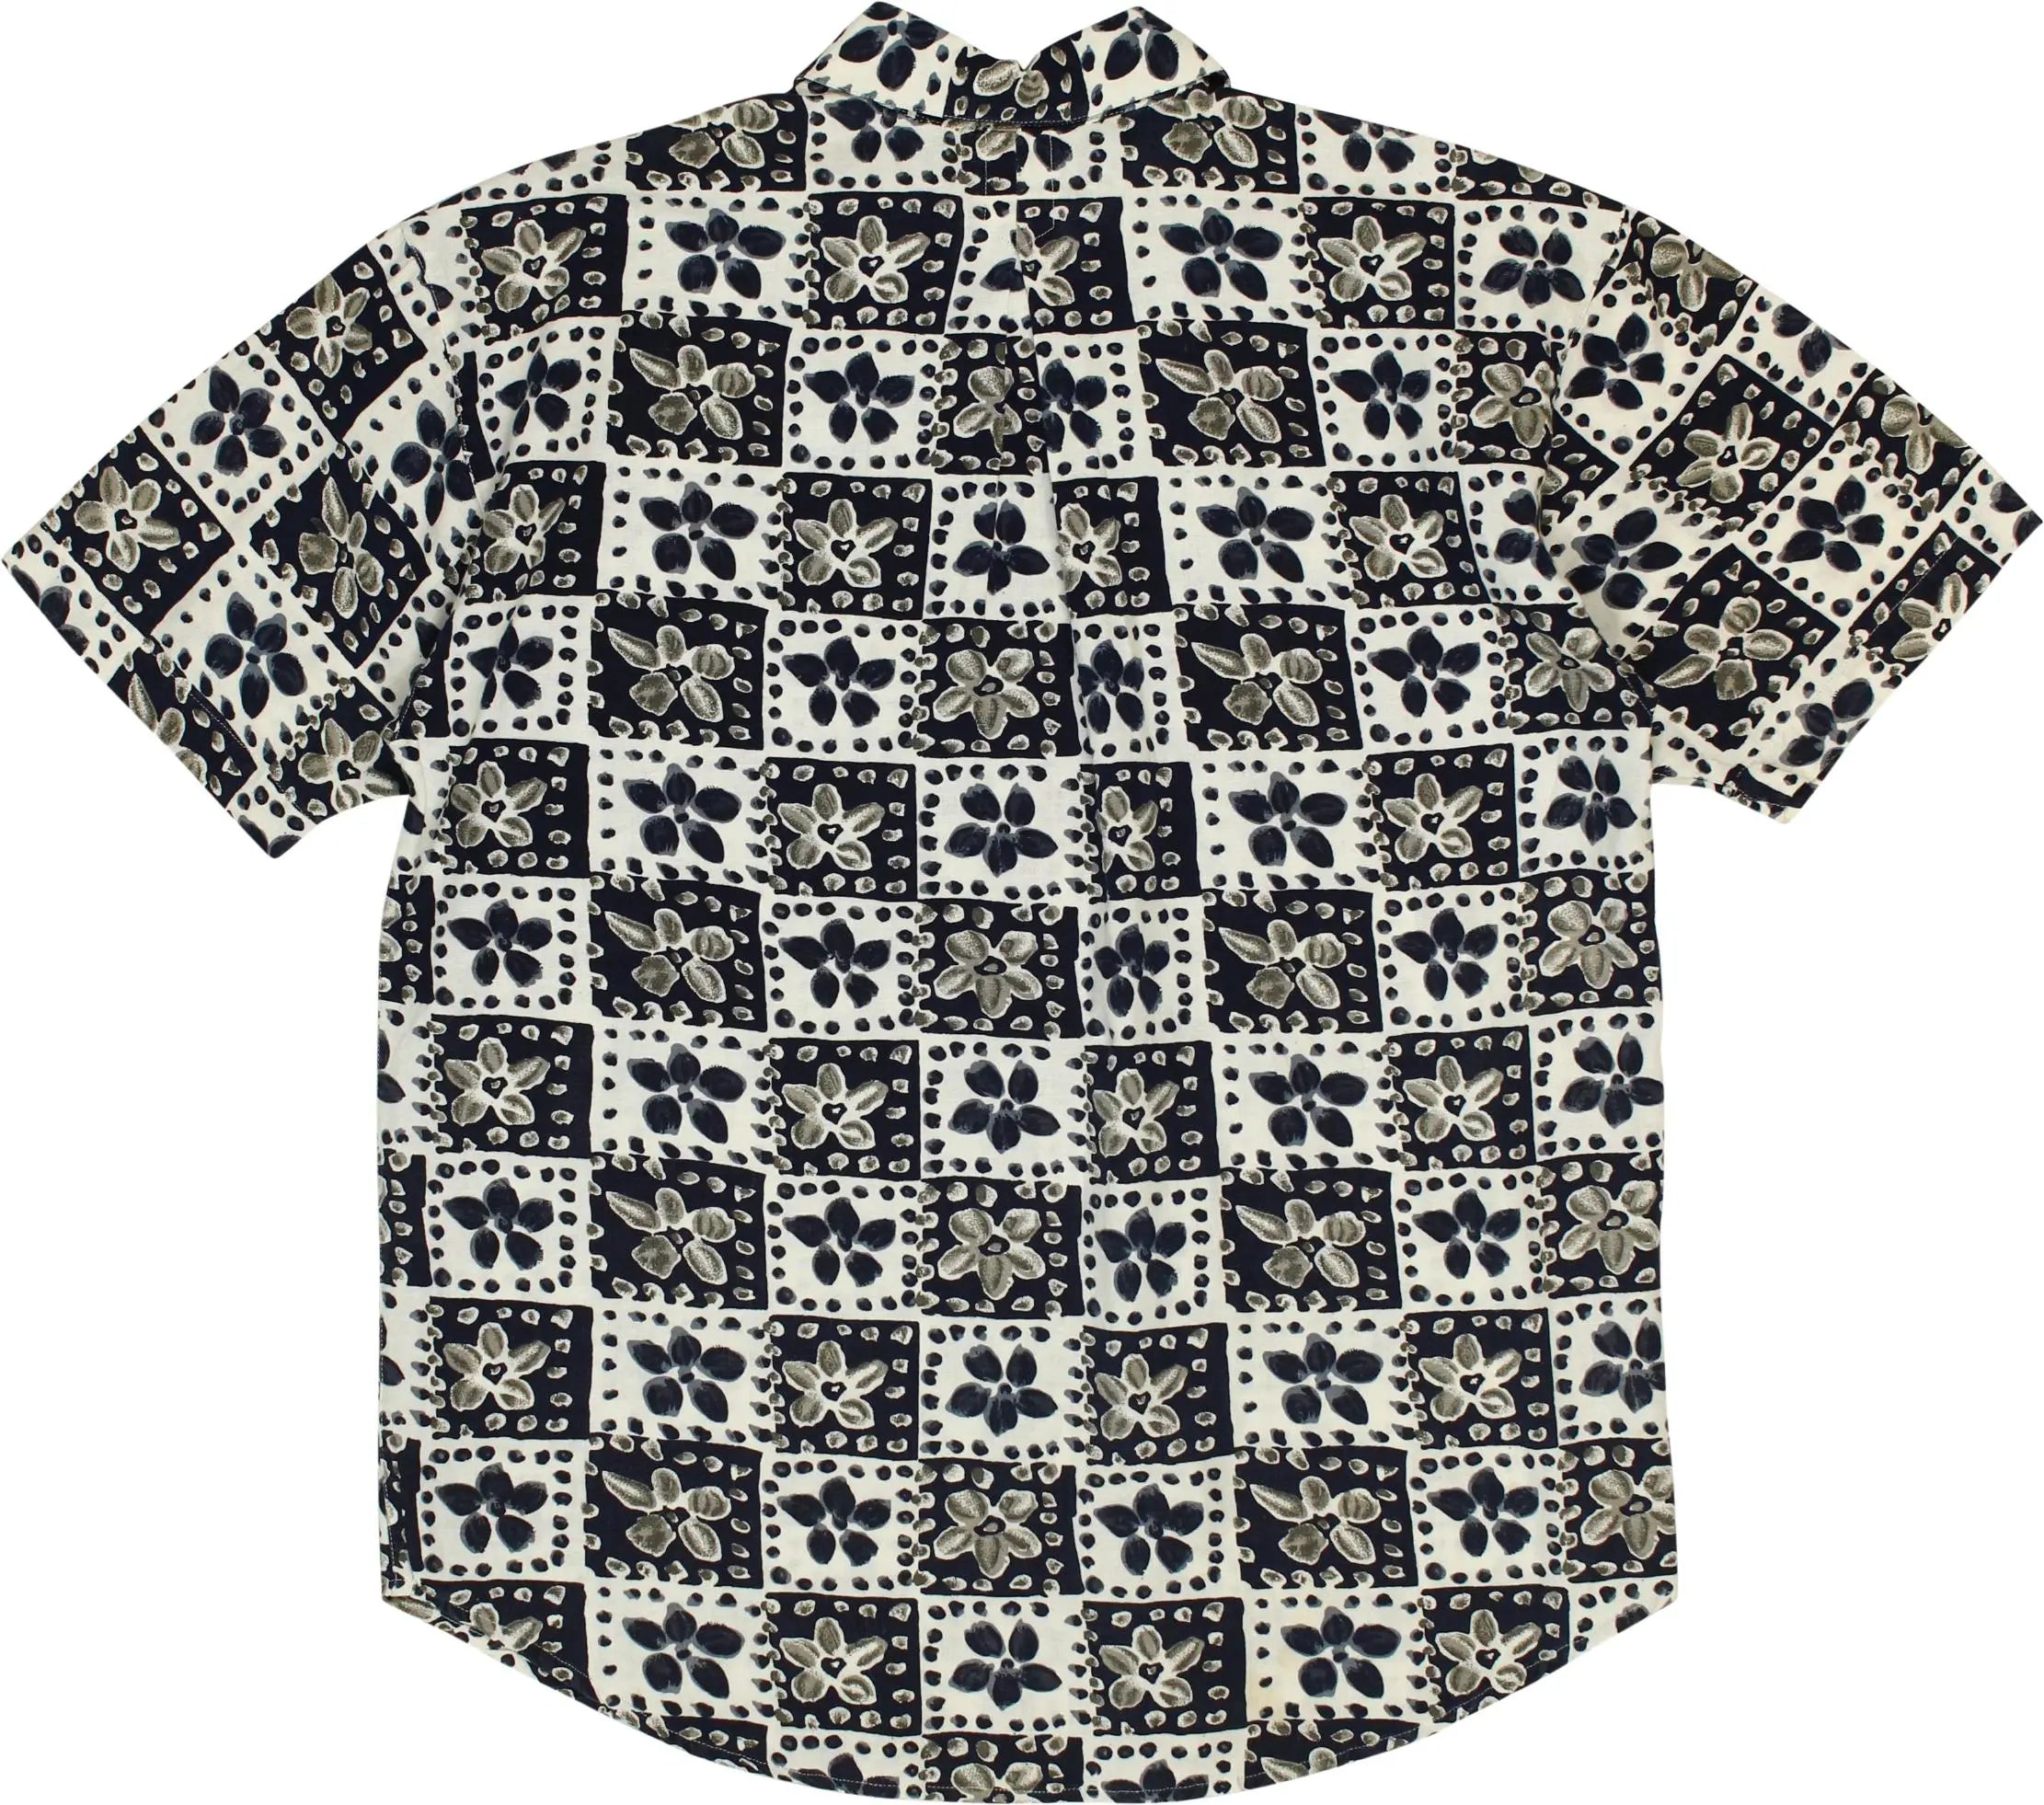 Krazy Kat - 90s Patterned Short Sleeve Shirt- ThriftTale.com - Vintage and second handclothing